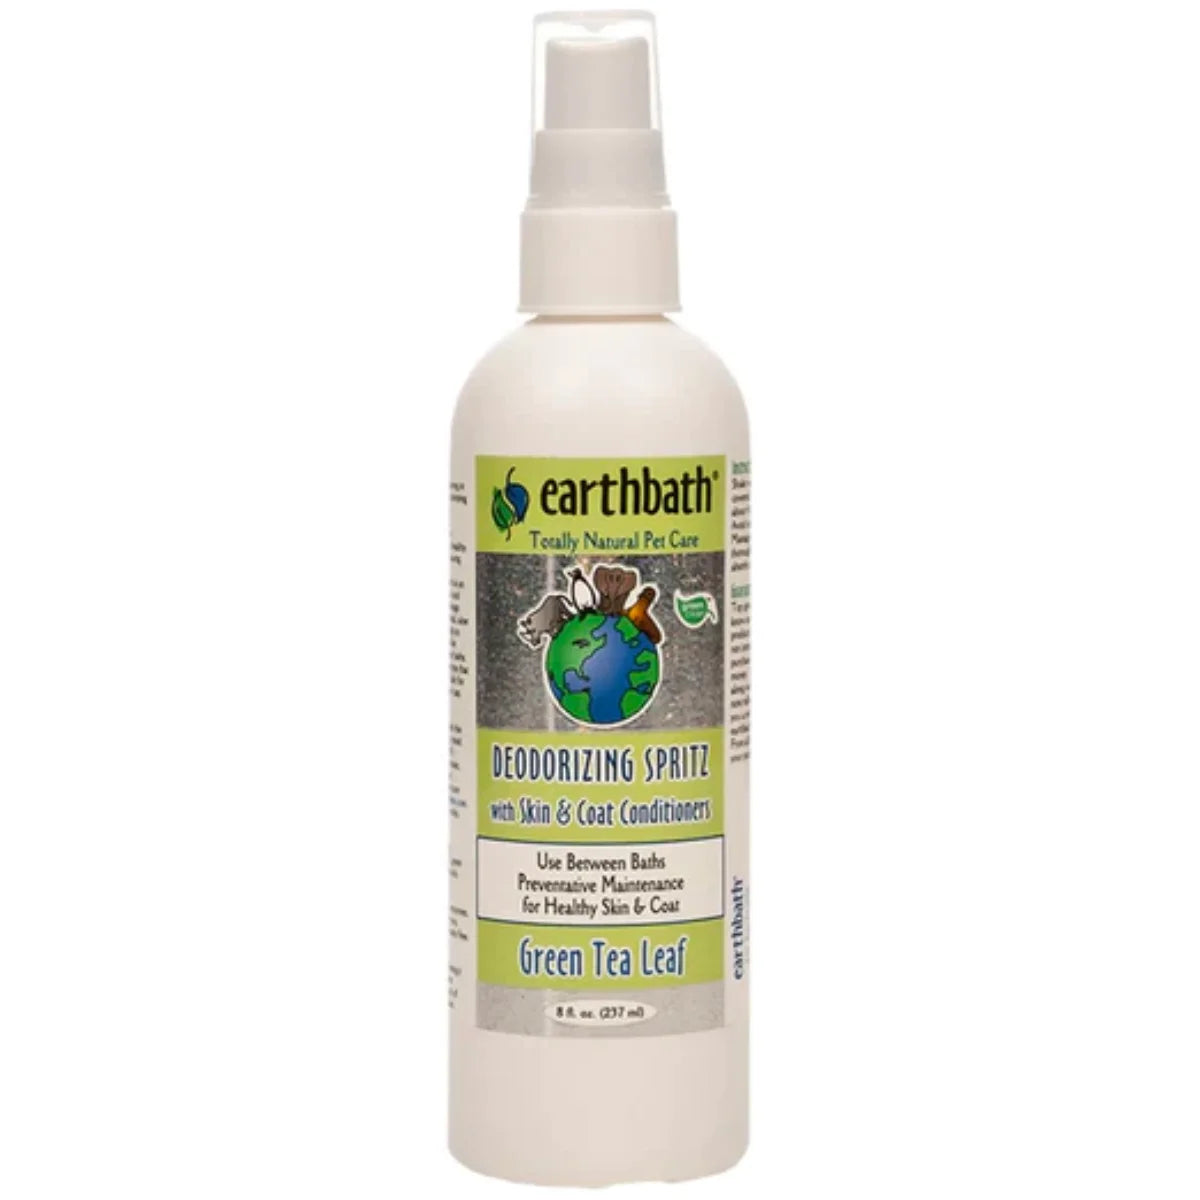 Earthbath 3 in 1 Deodorizing Spritz - Green Tea Leaf with Skin & Coat Conditioners 8oz